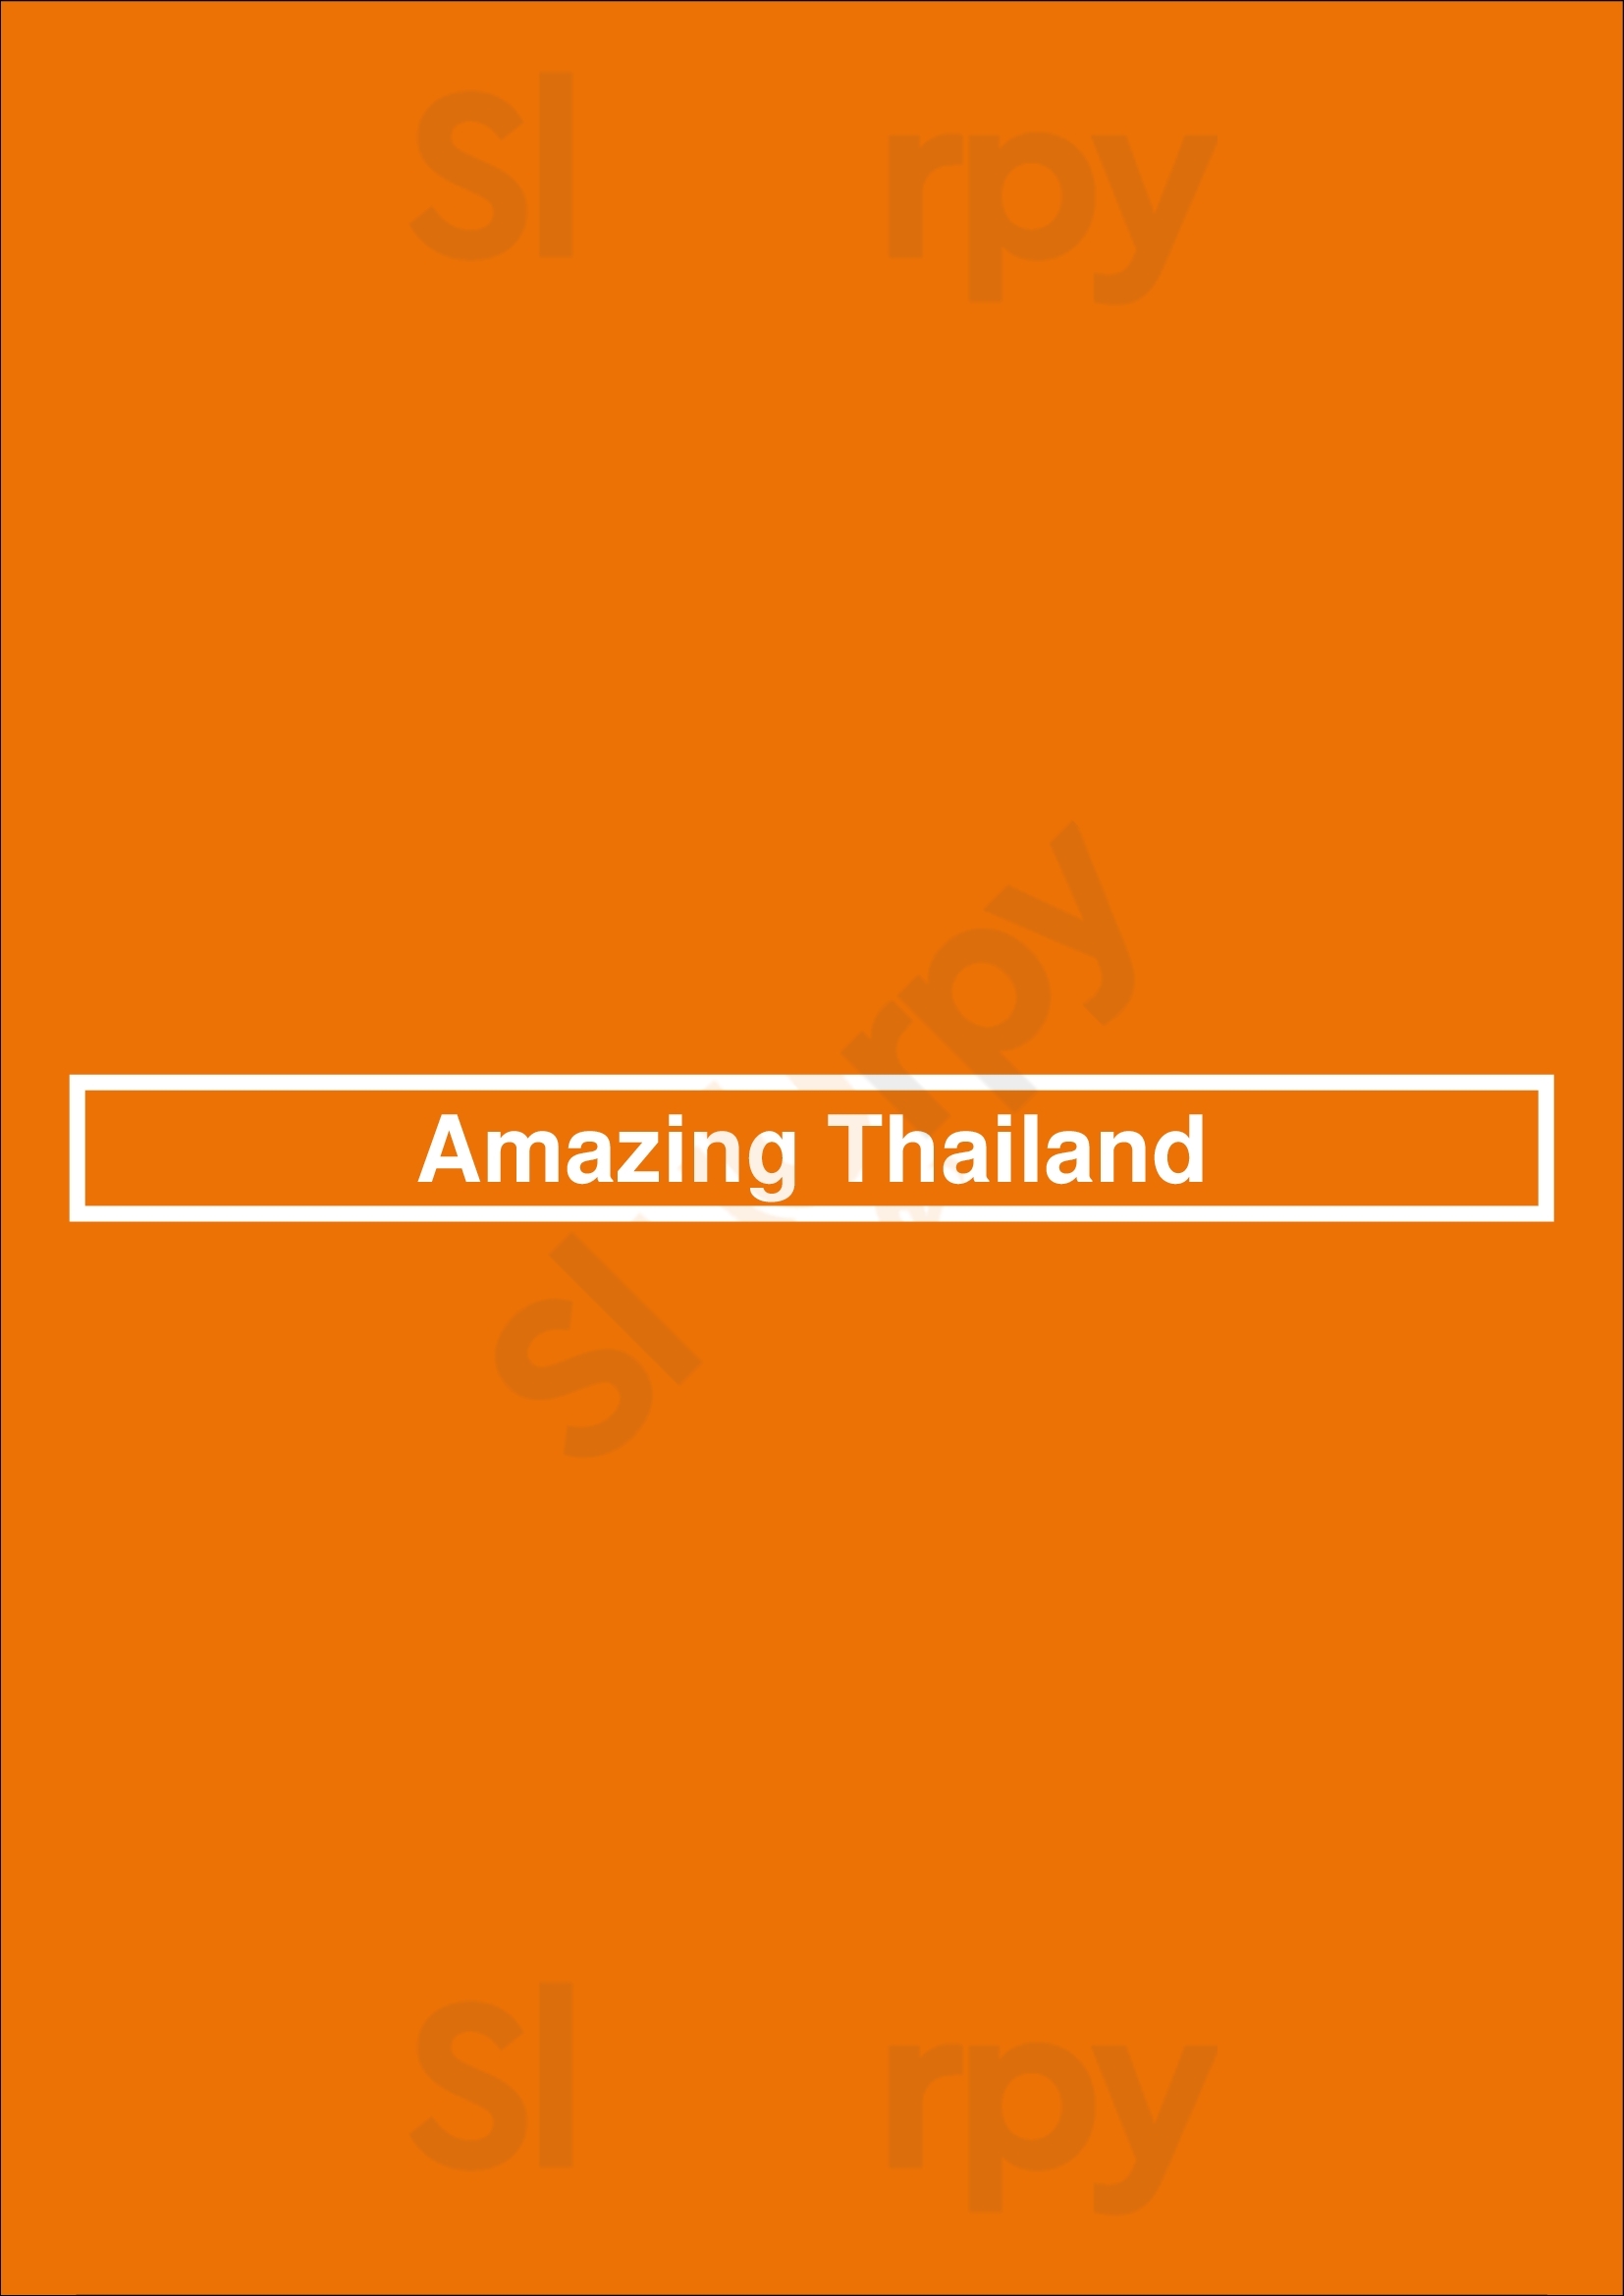 Amazing Thailand Minneapolis Menu - 1